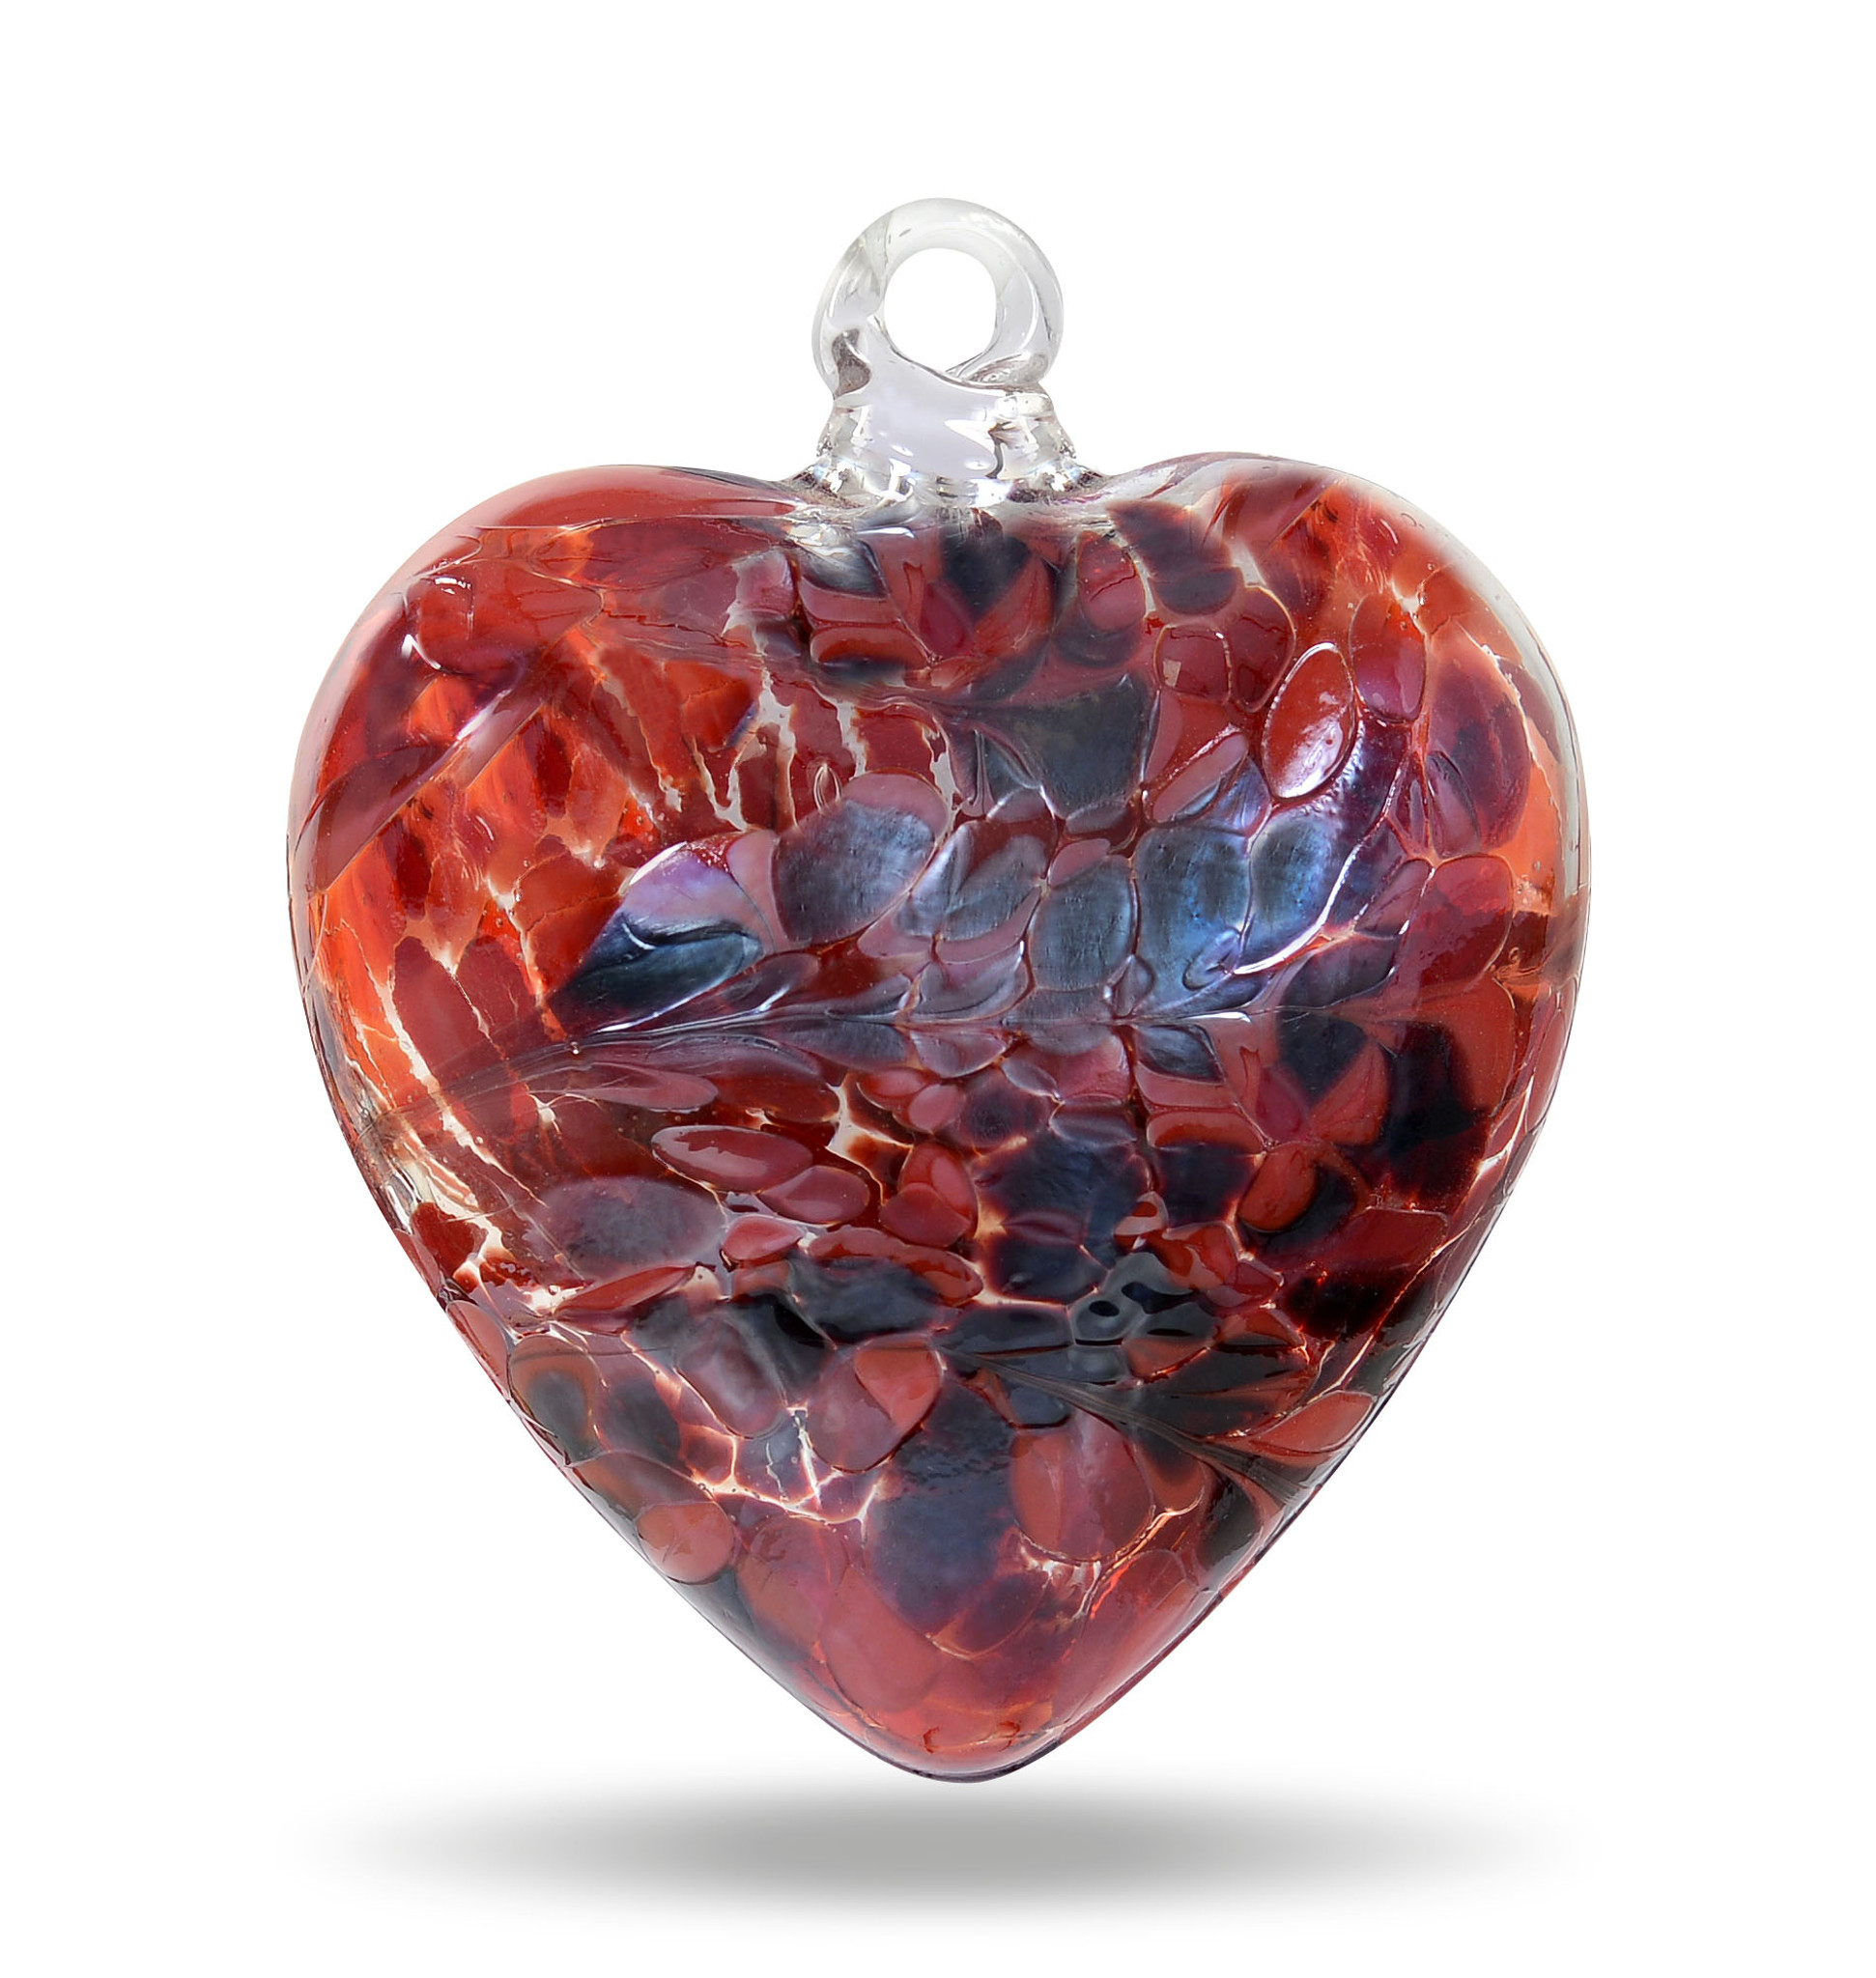 Medium Sized Glass Hearts (12 colors!)